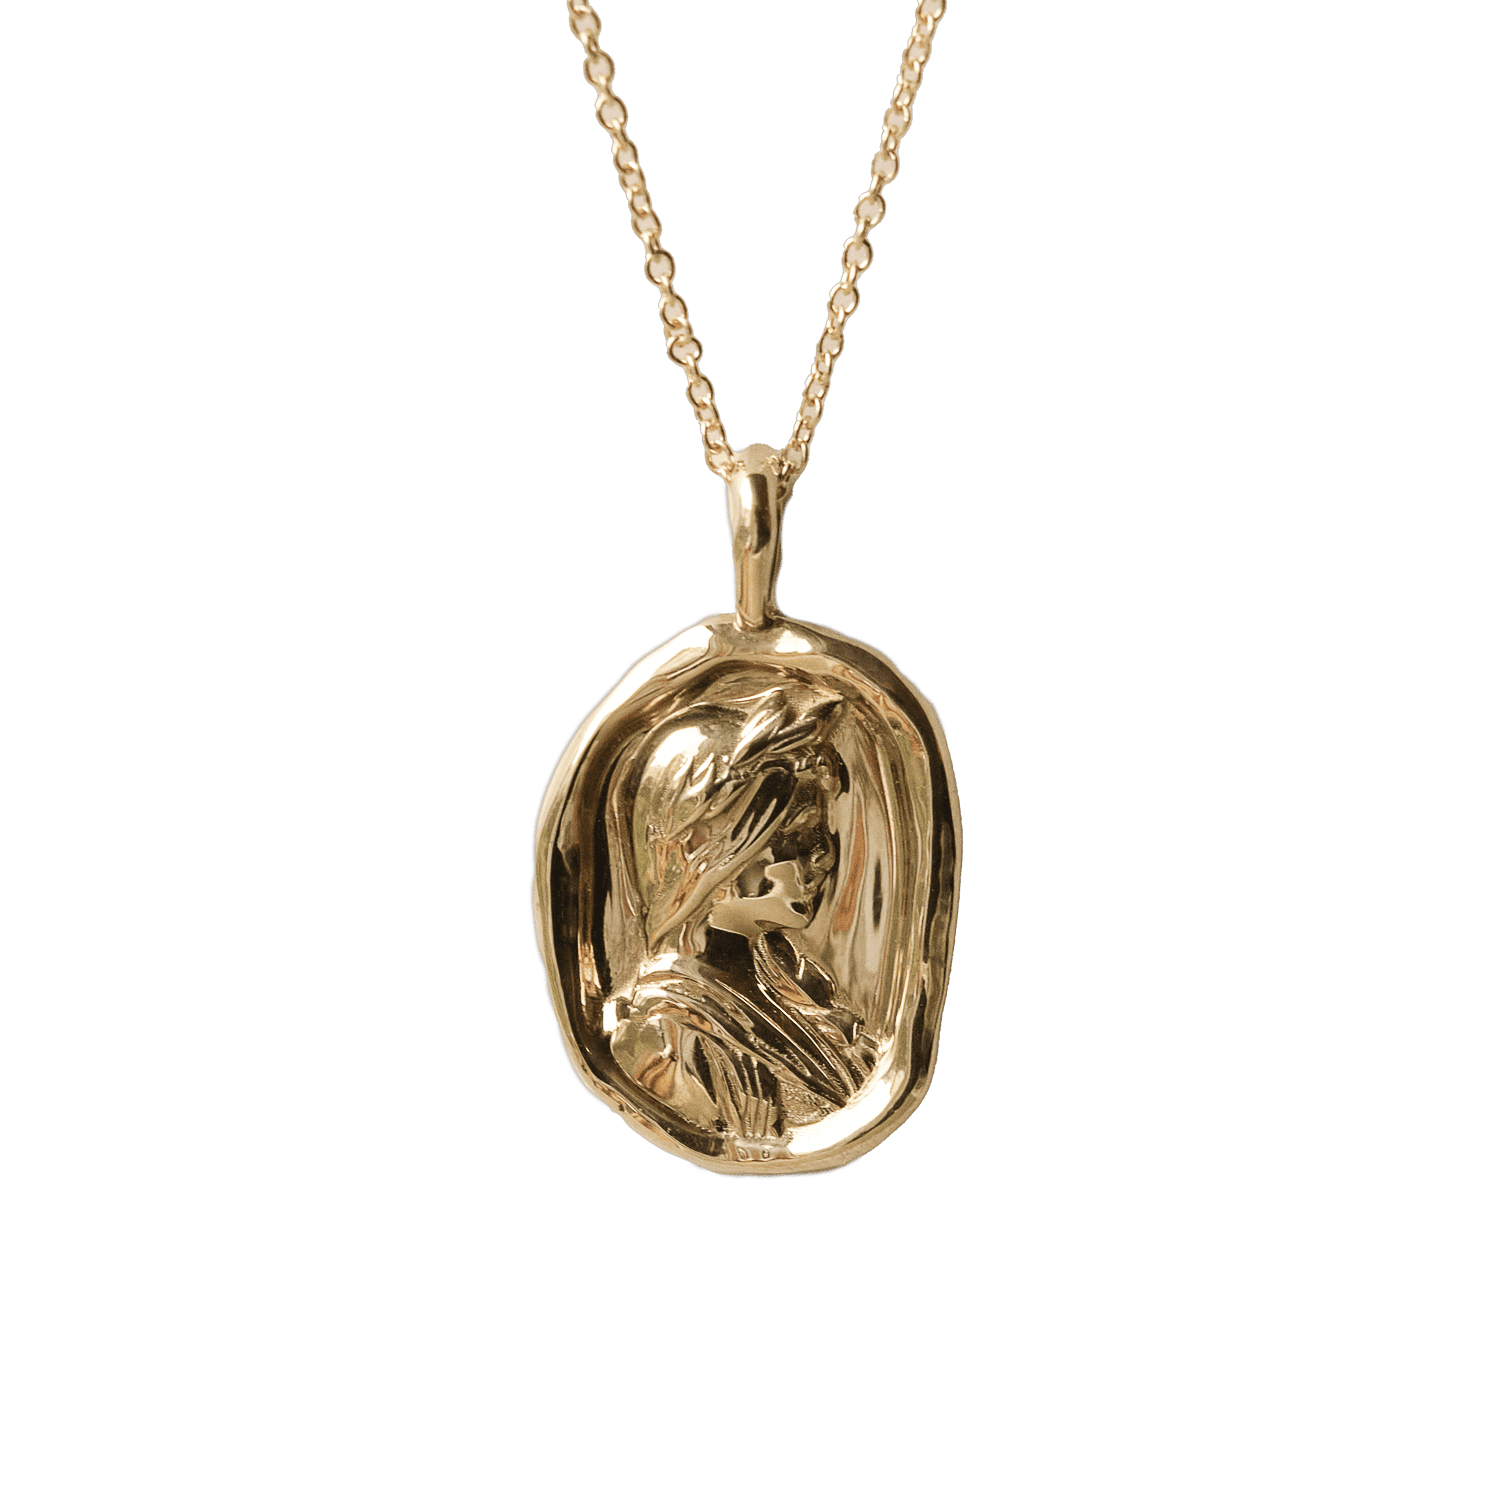 Sappho Molten Gold Pendant |  Necklaces - Common Era Jewelry